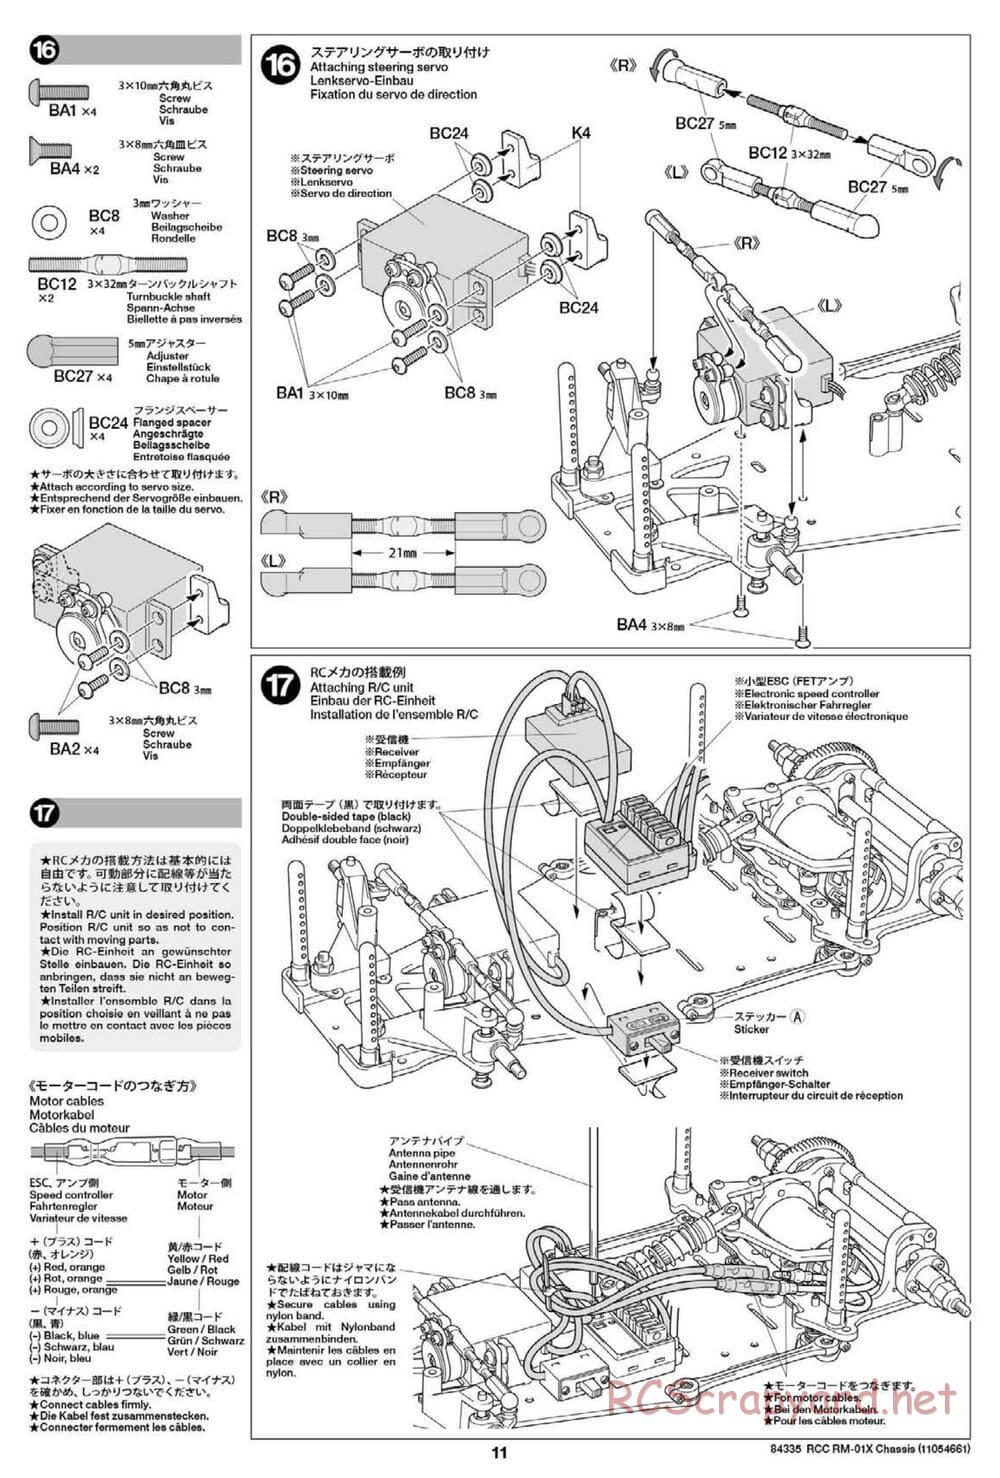 Tamiya - RM-01X Chassis - Manual - Page 11